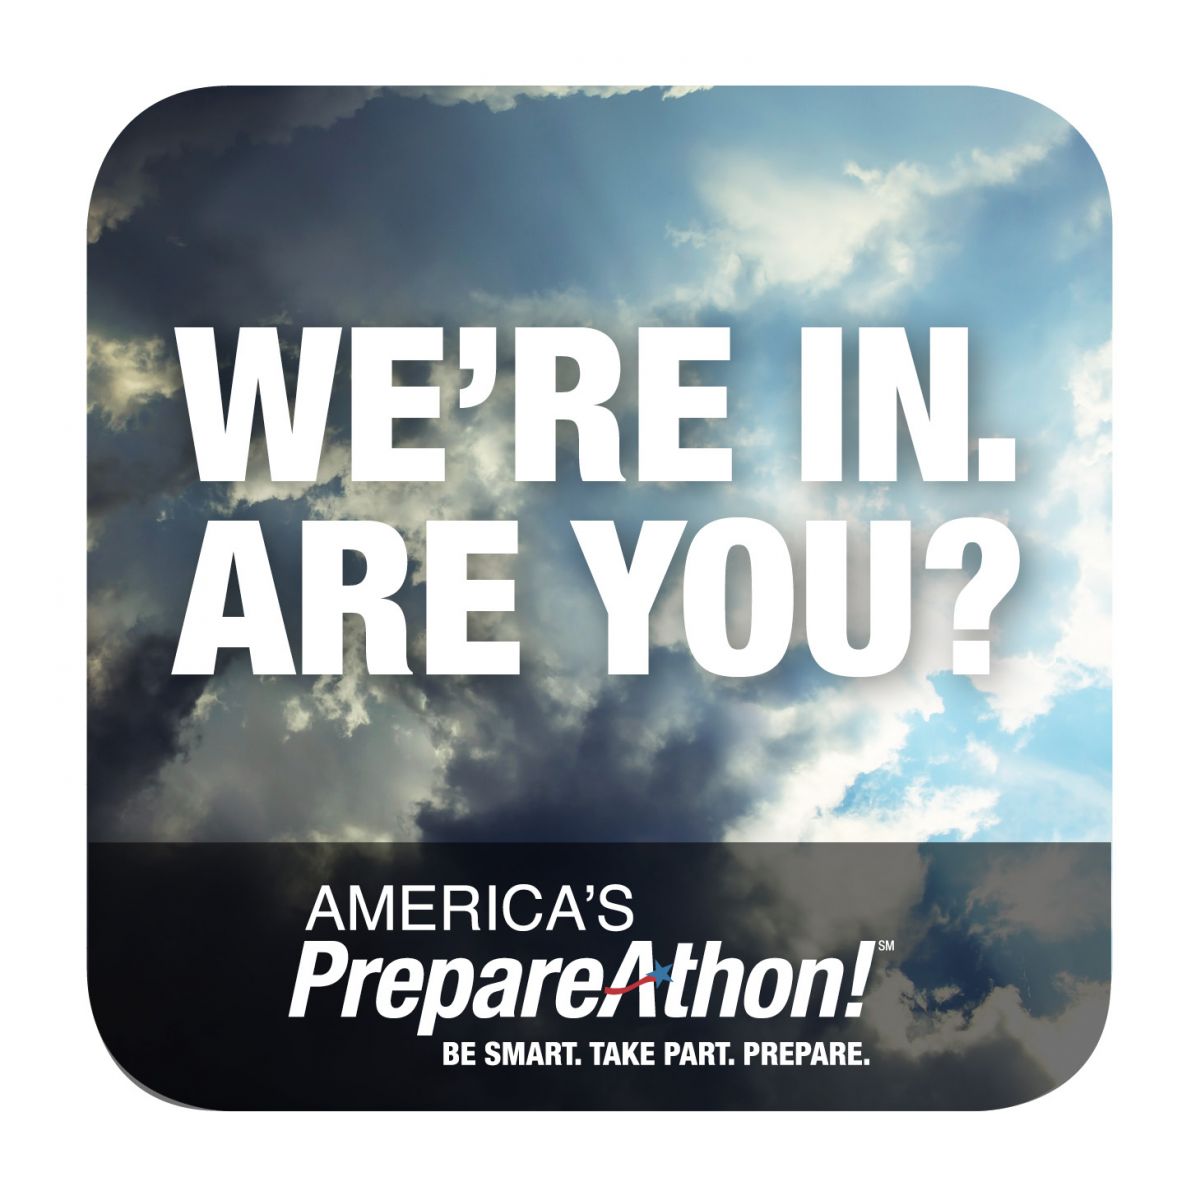 Join us for America's PrepareAthon!